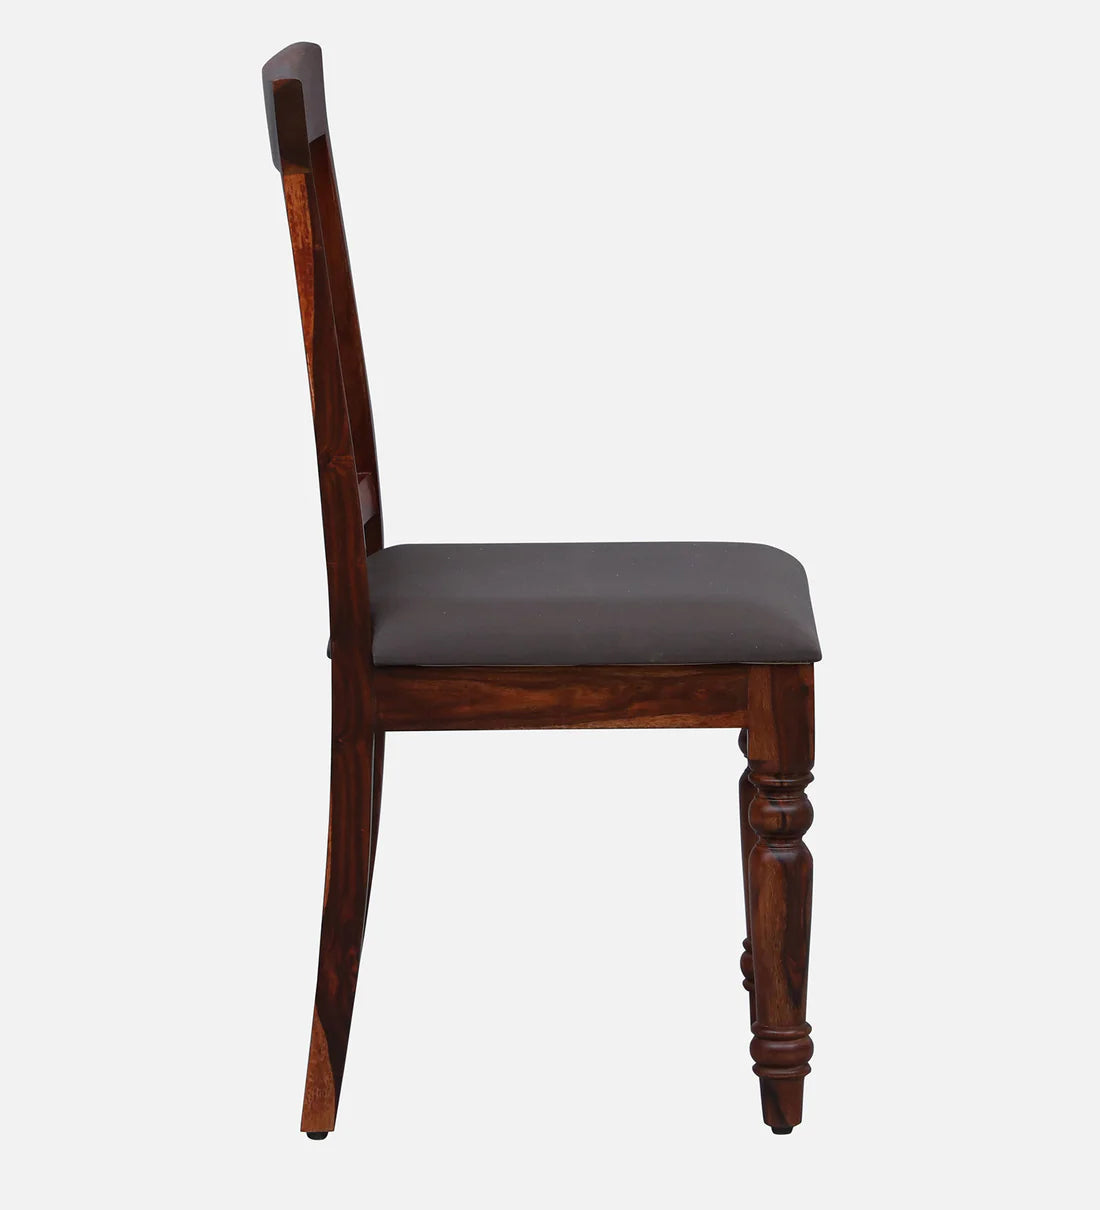 Sheerel Solid Wood Dining Chair (Set of 2) brown floral upholstery In Honey Oak Finish - By Rajwada - Rajwada Furnish